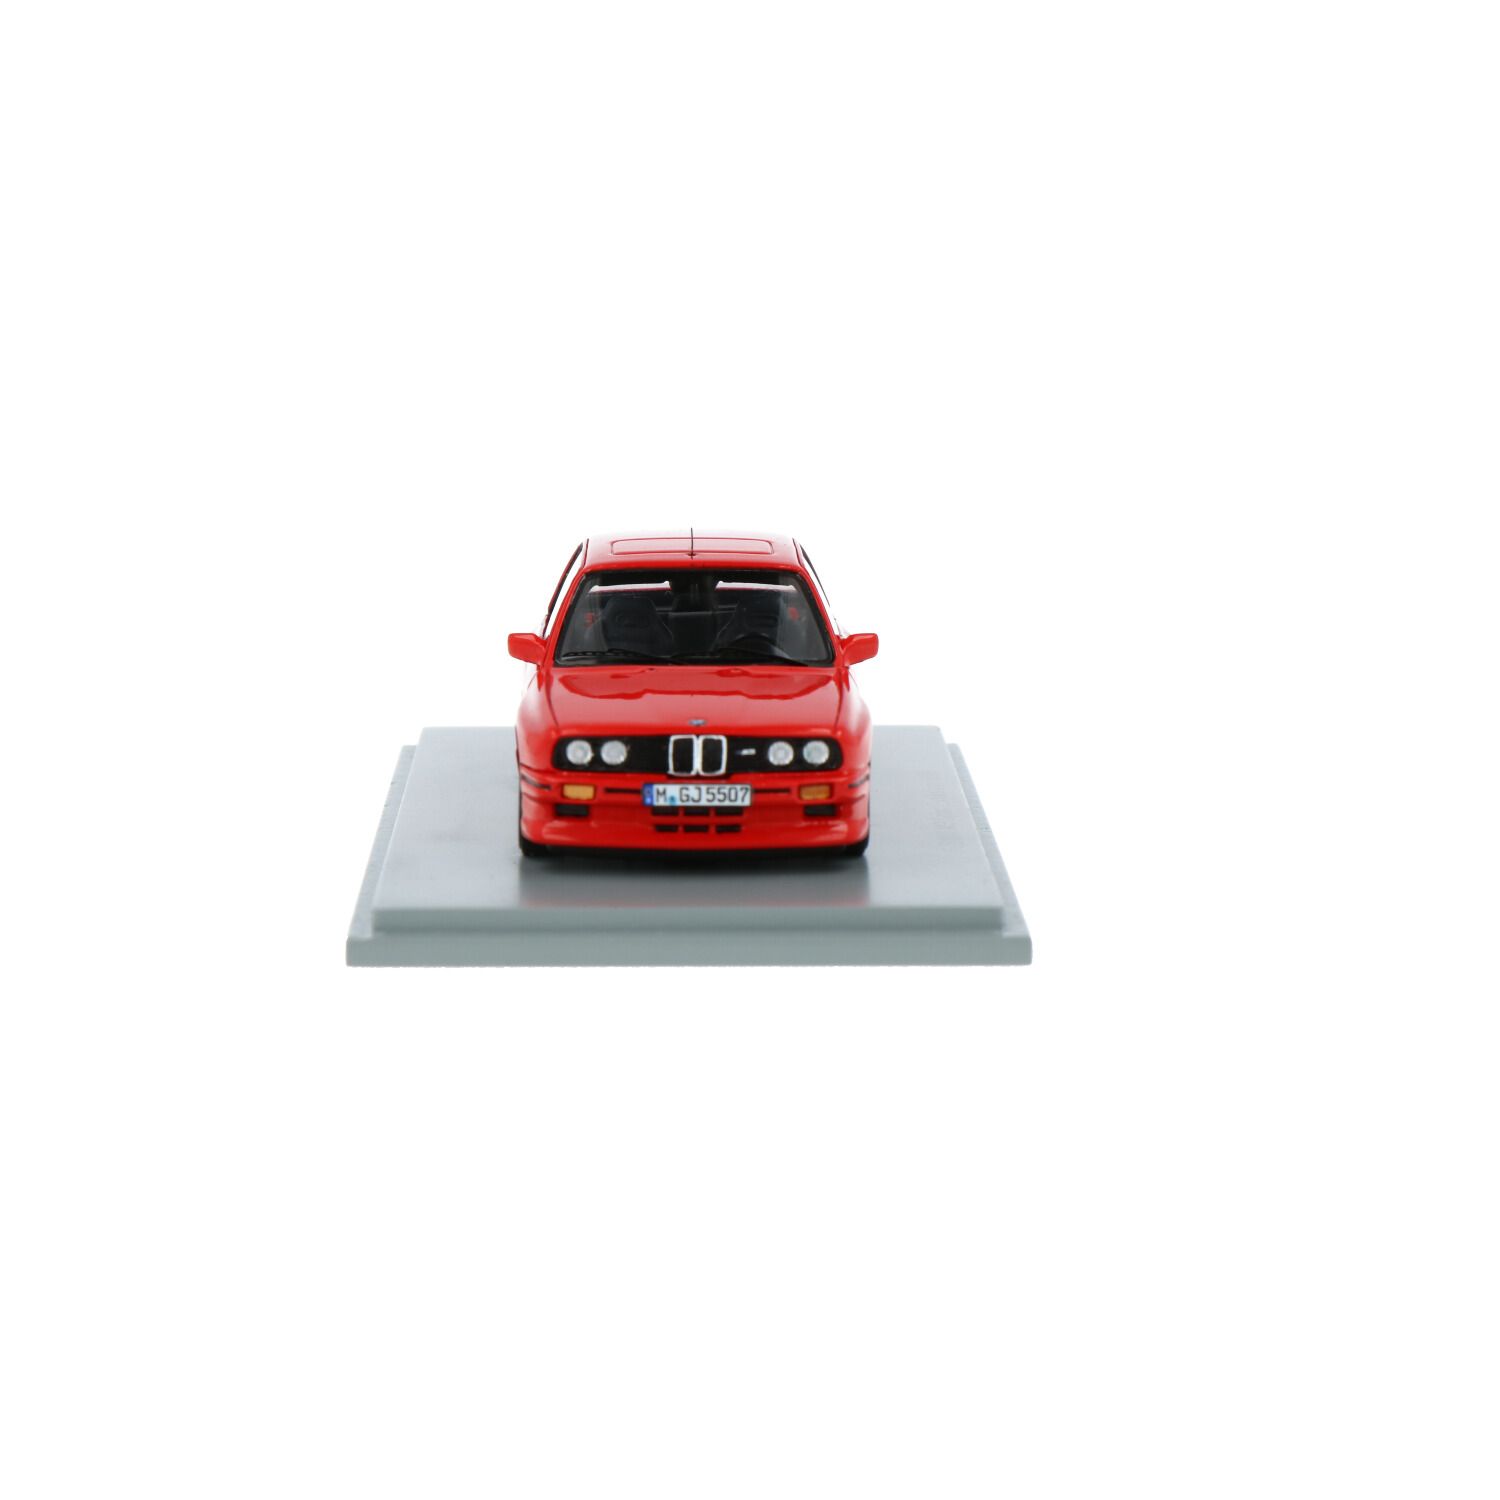 SPORT EVOLUTION 1990 RED ART E30 SPARK MODEL 1/43 BMW M3 S8003 